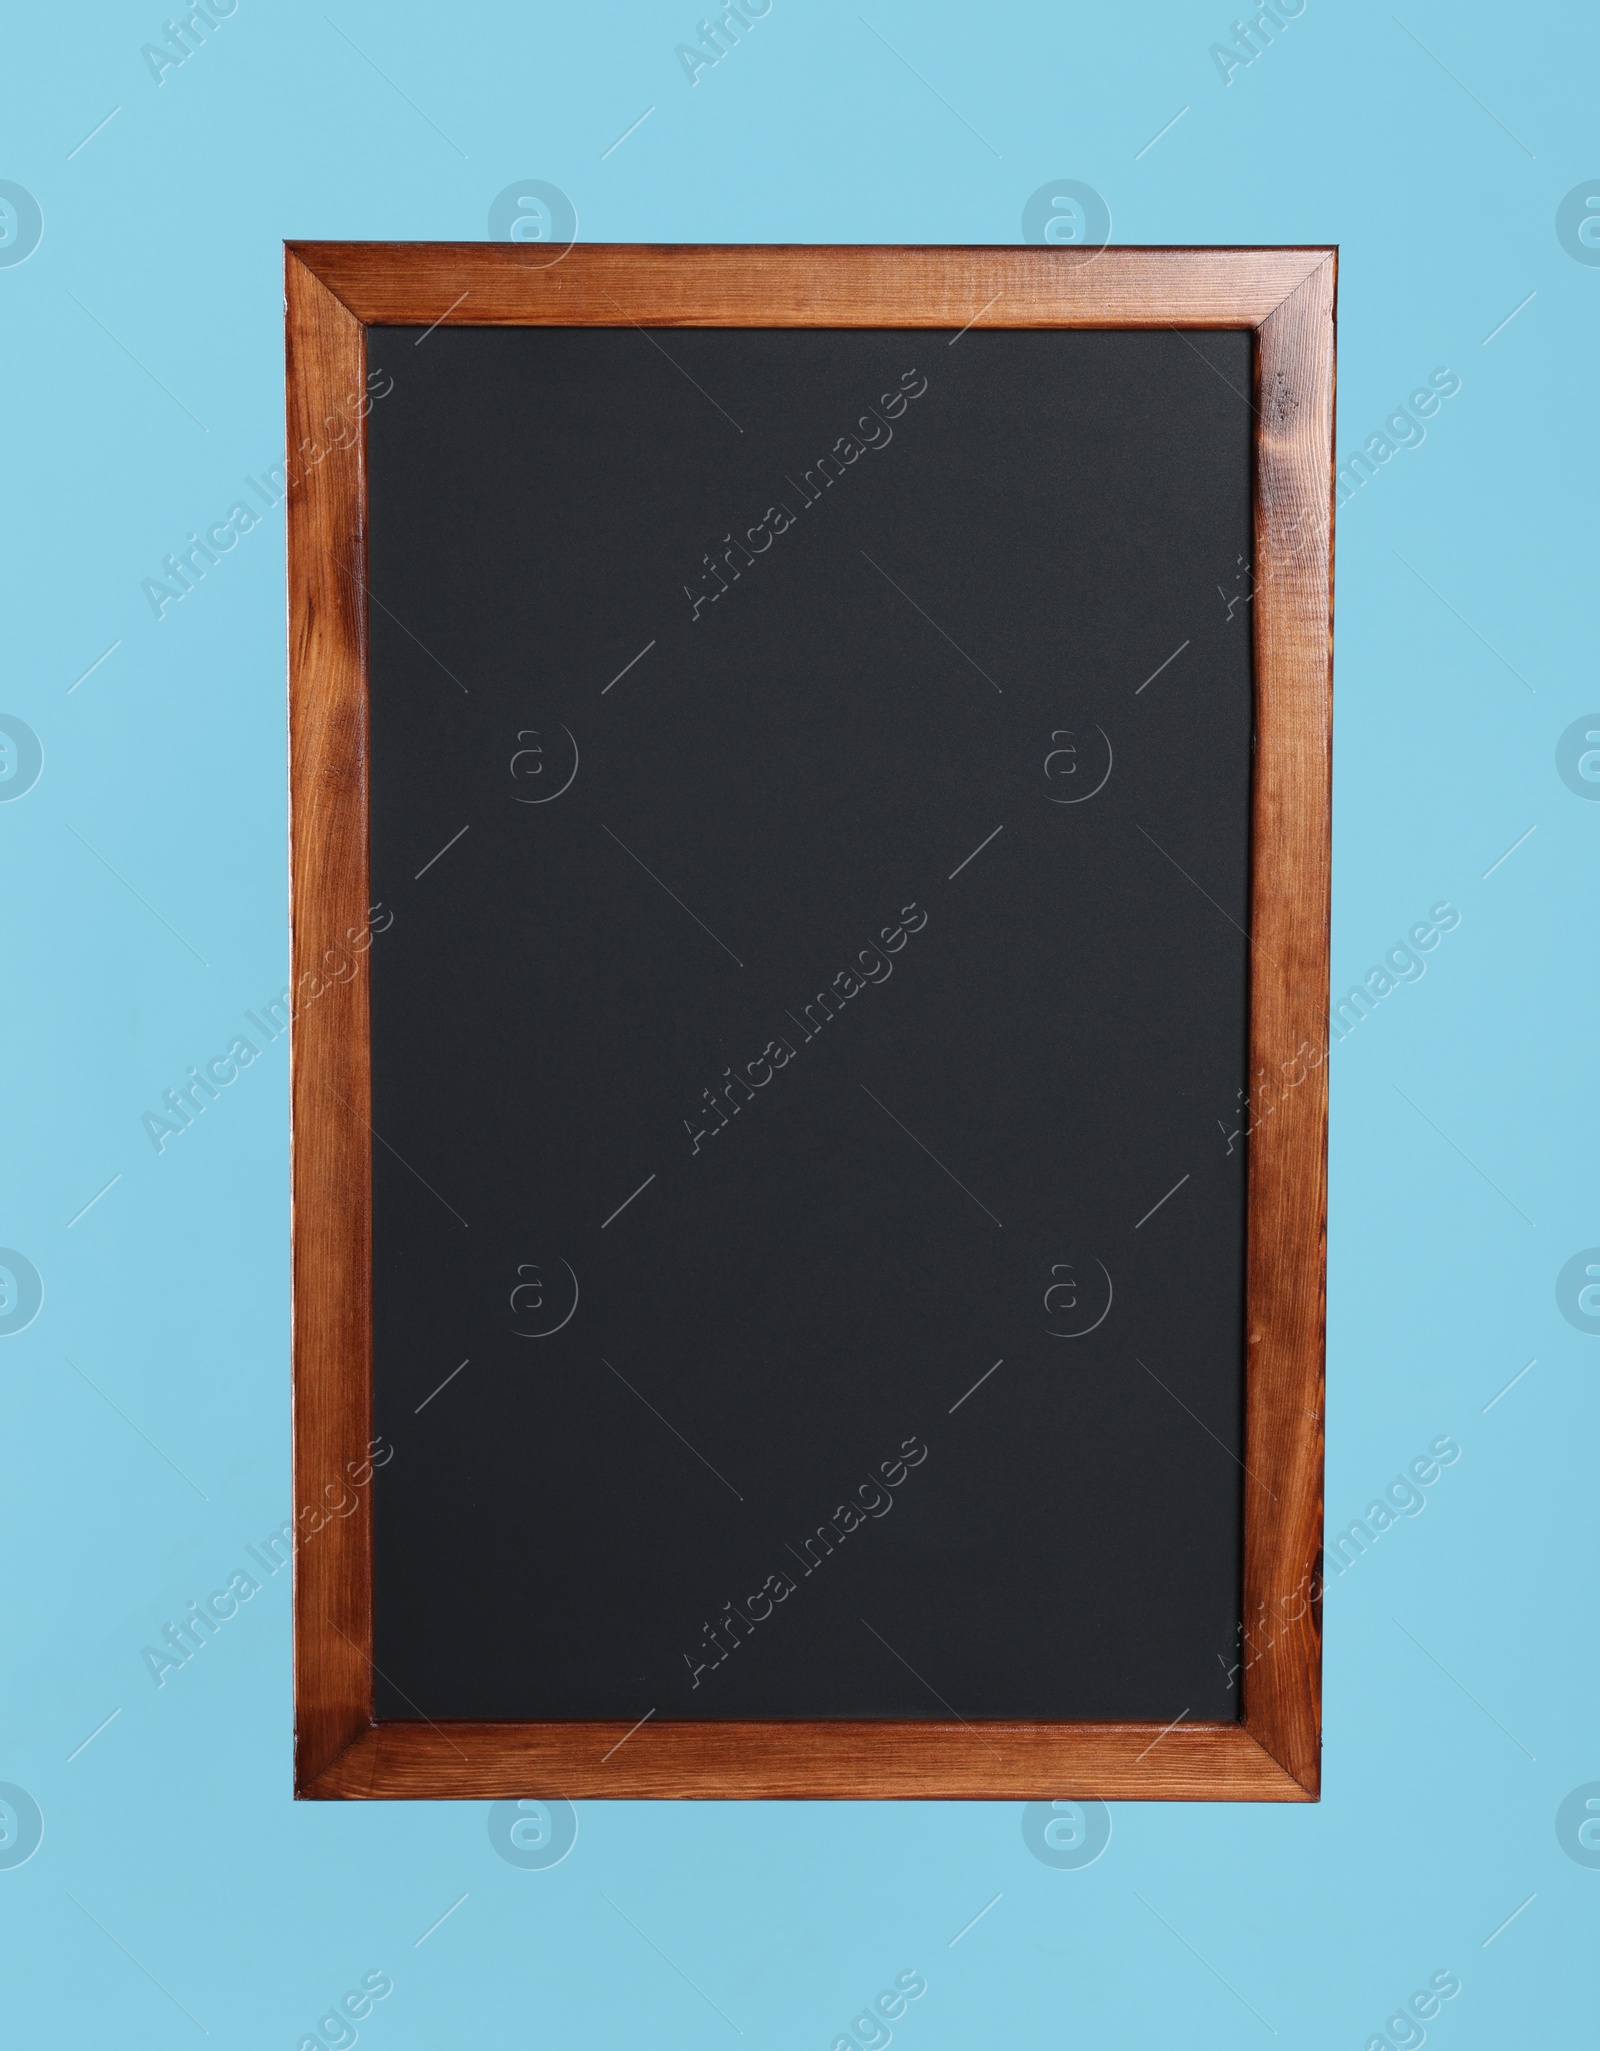 Photo of Clean black chalkboard on light blue background